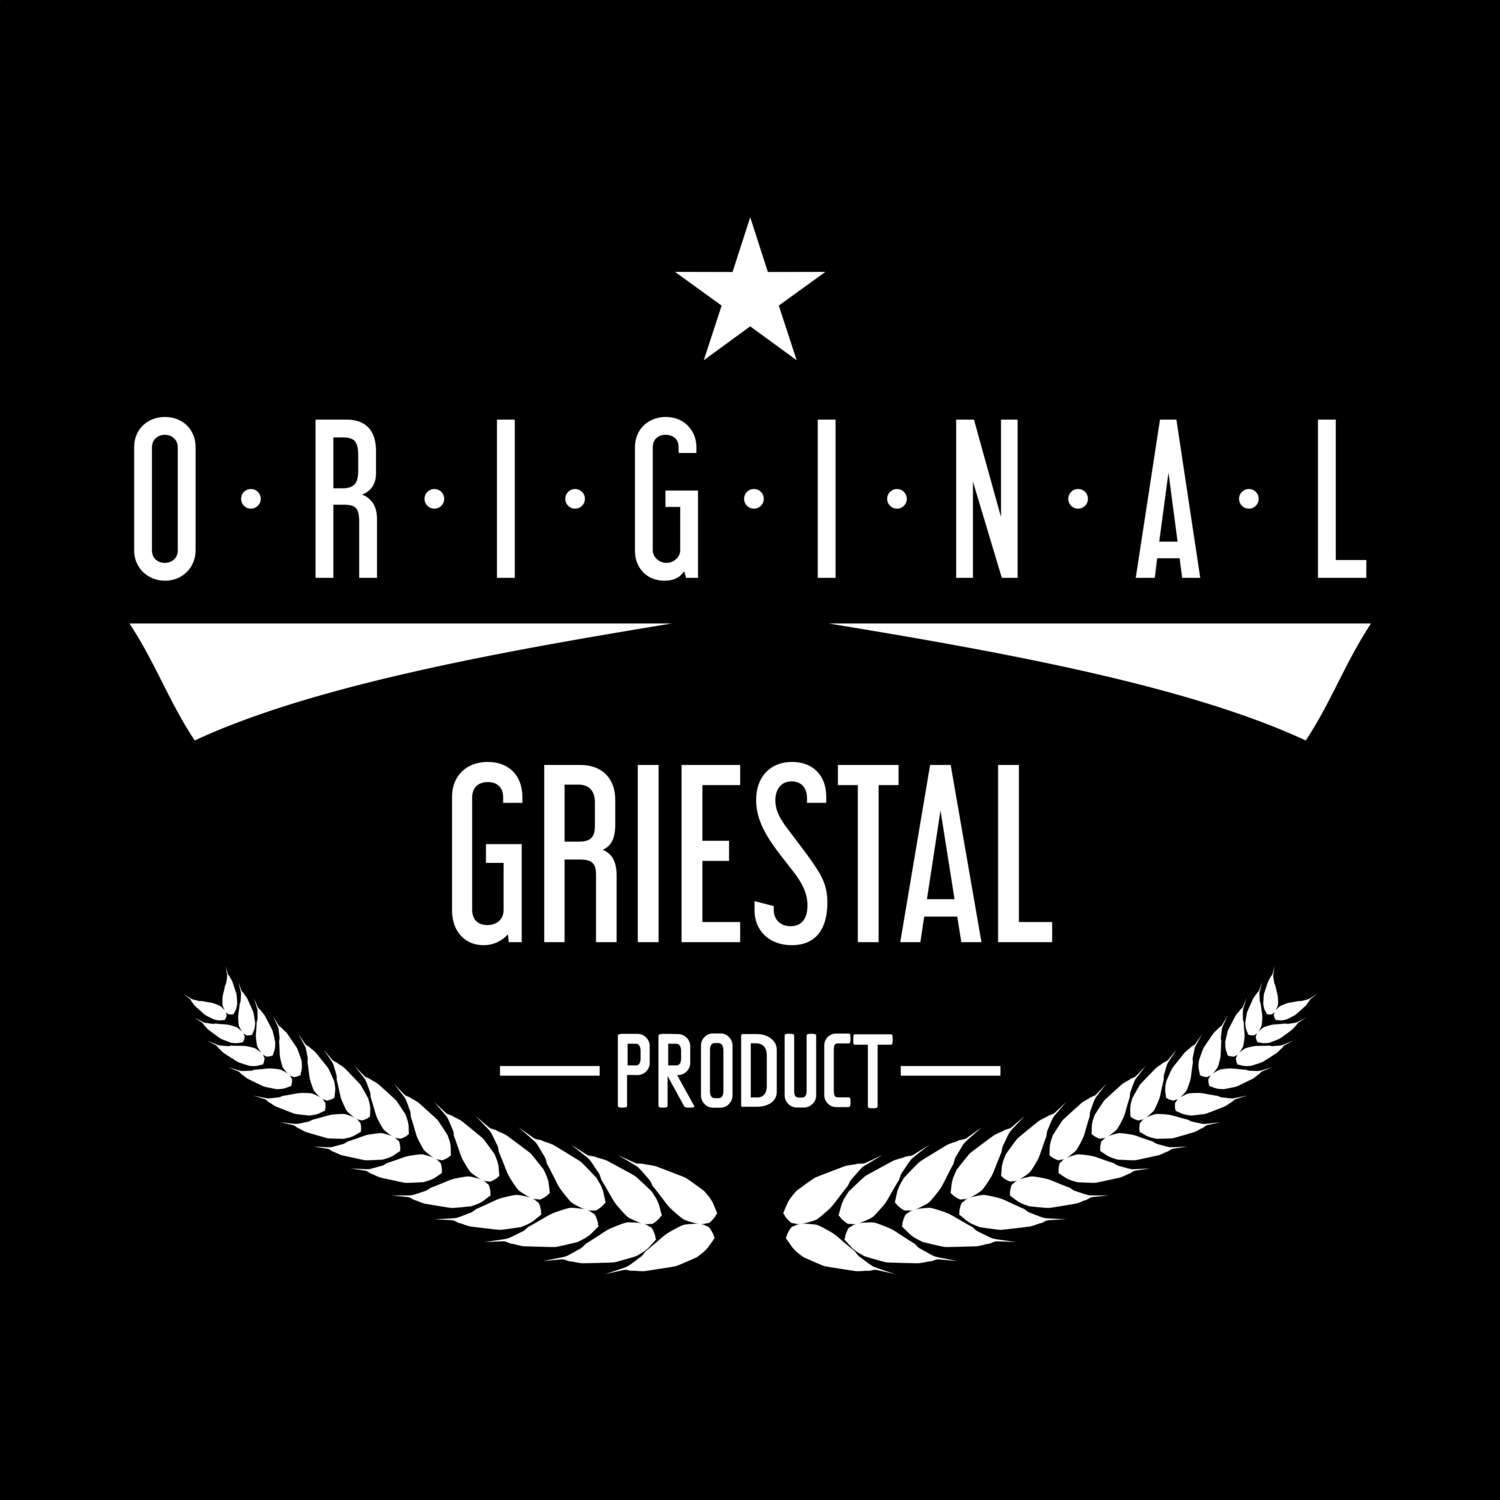 Griestal T-Shirt »Original Product«